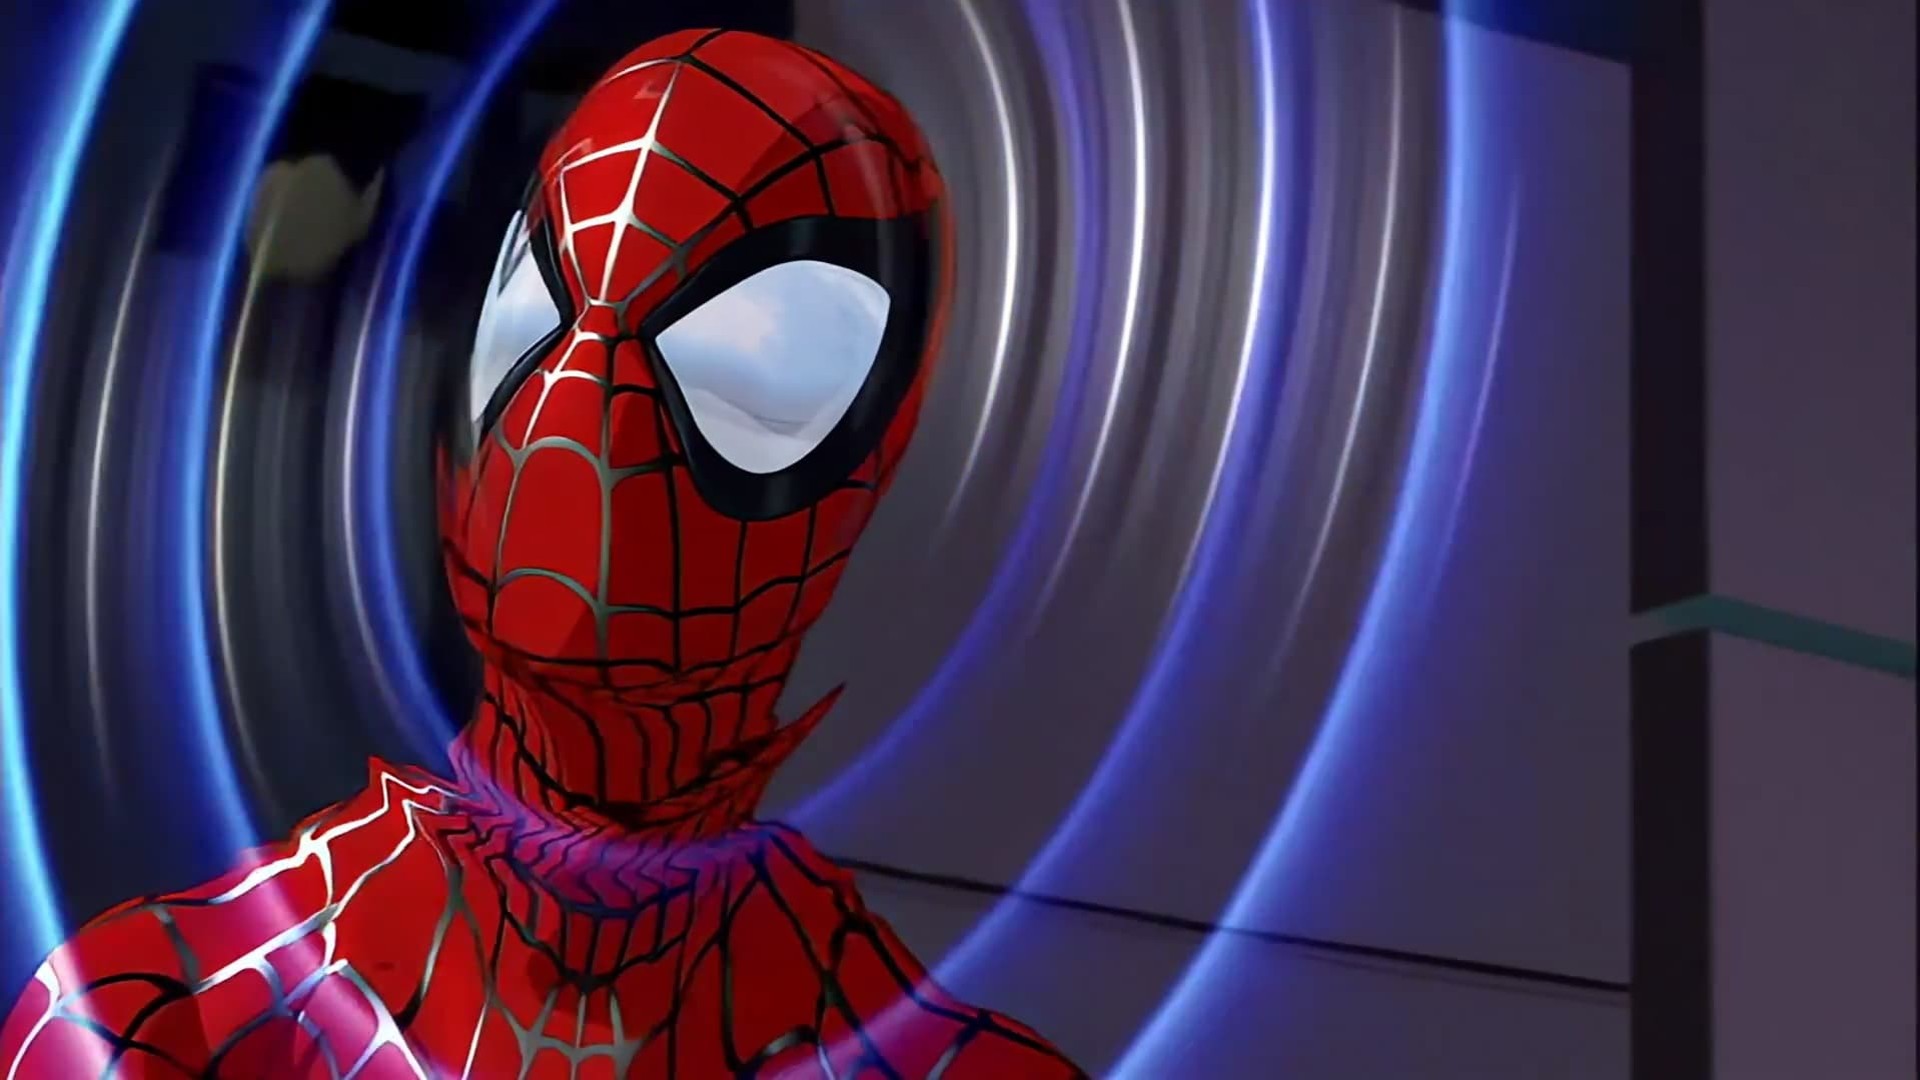 Sonar-like rings emanate from Spider-Man indicating his spidey-sense tingling.